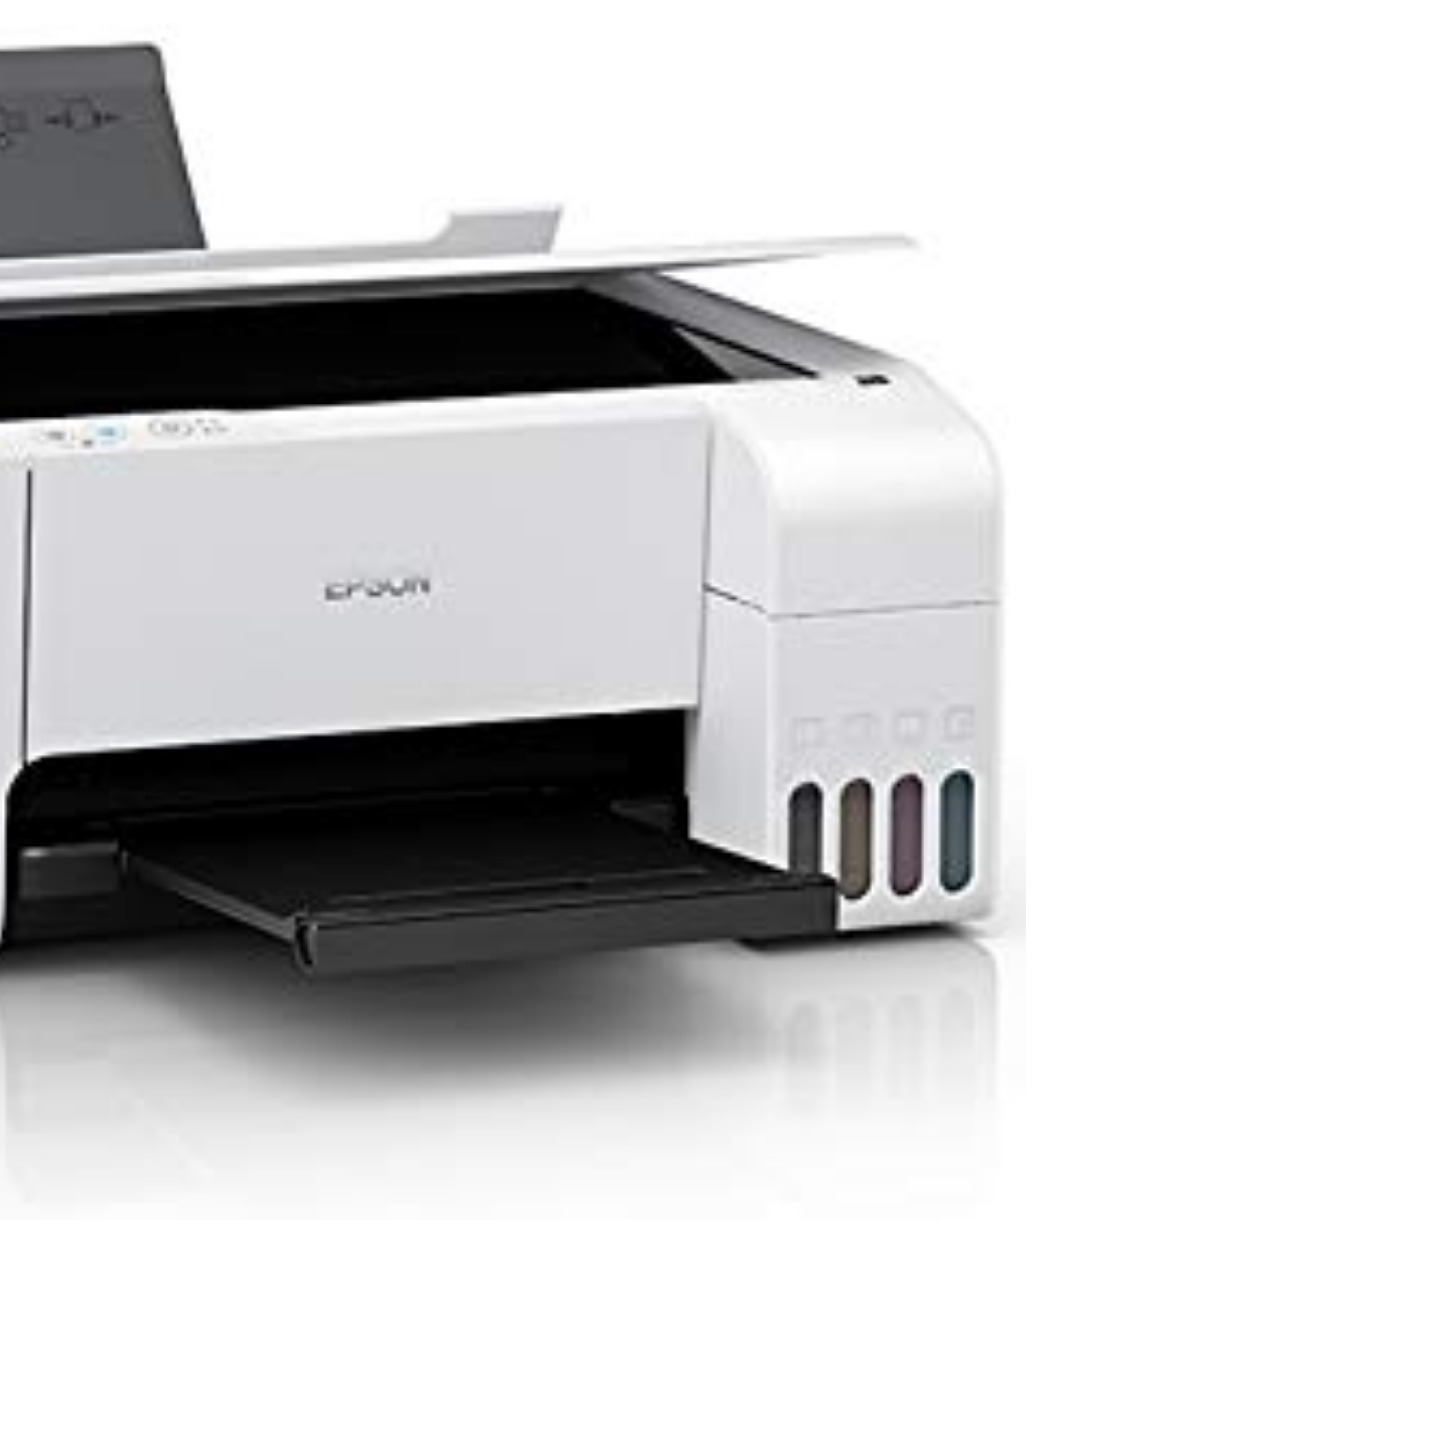 Epson Color Printer 0233